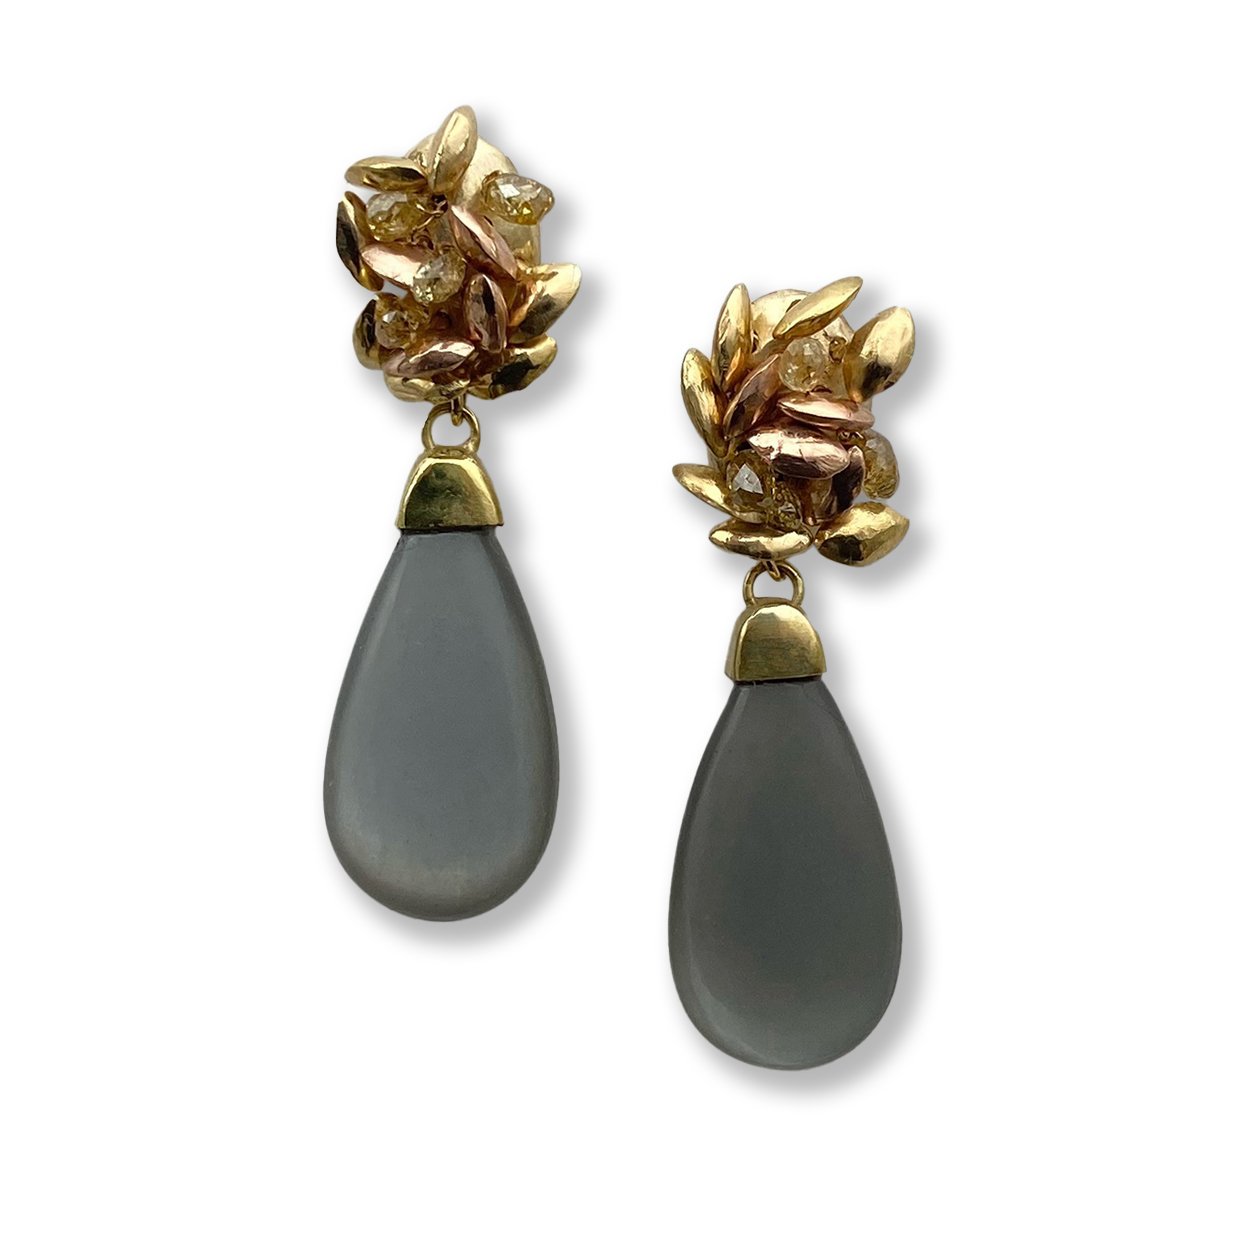 Acini gold earrings with diamonds and moonstones